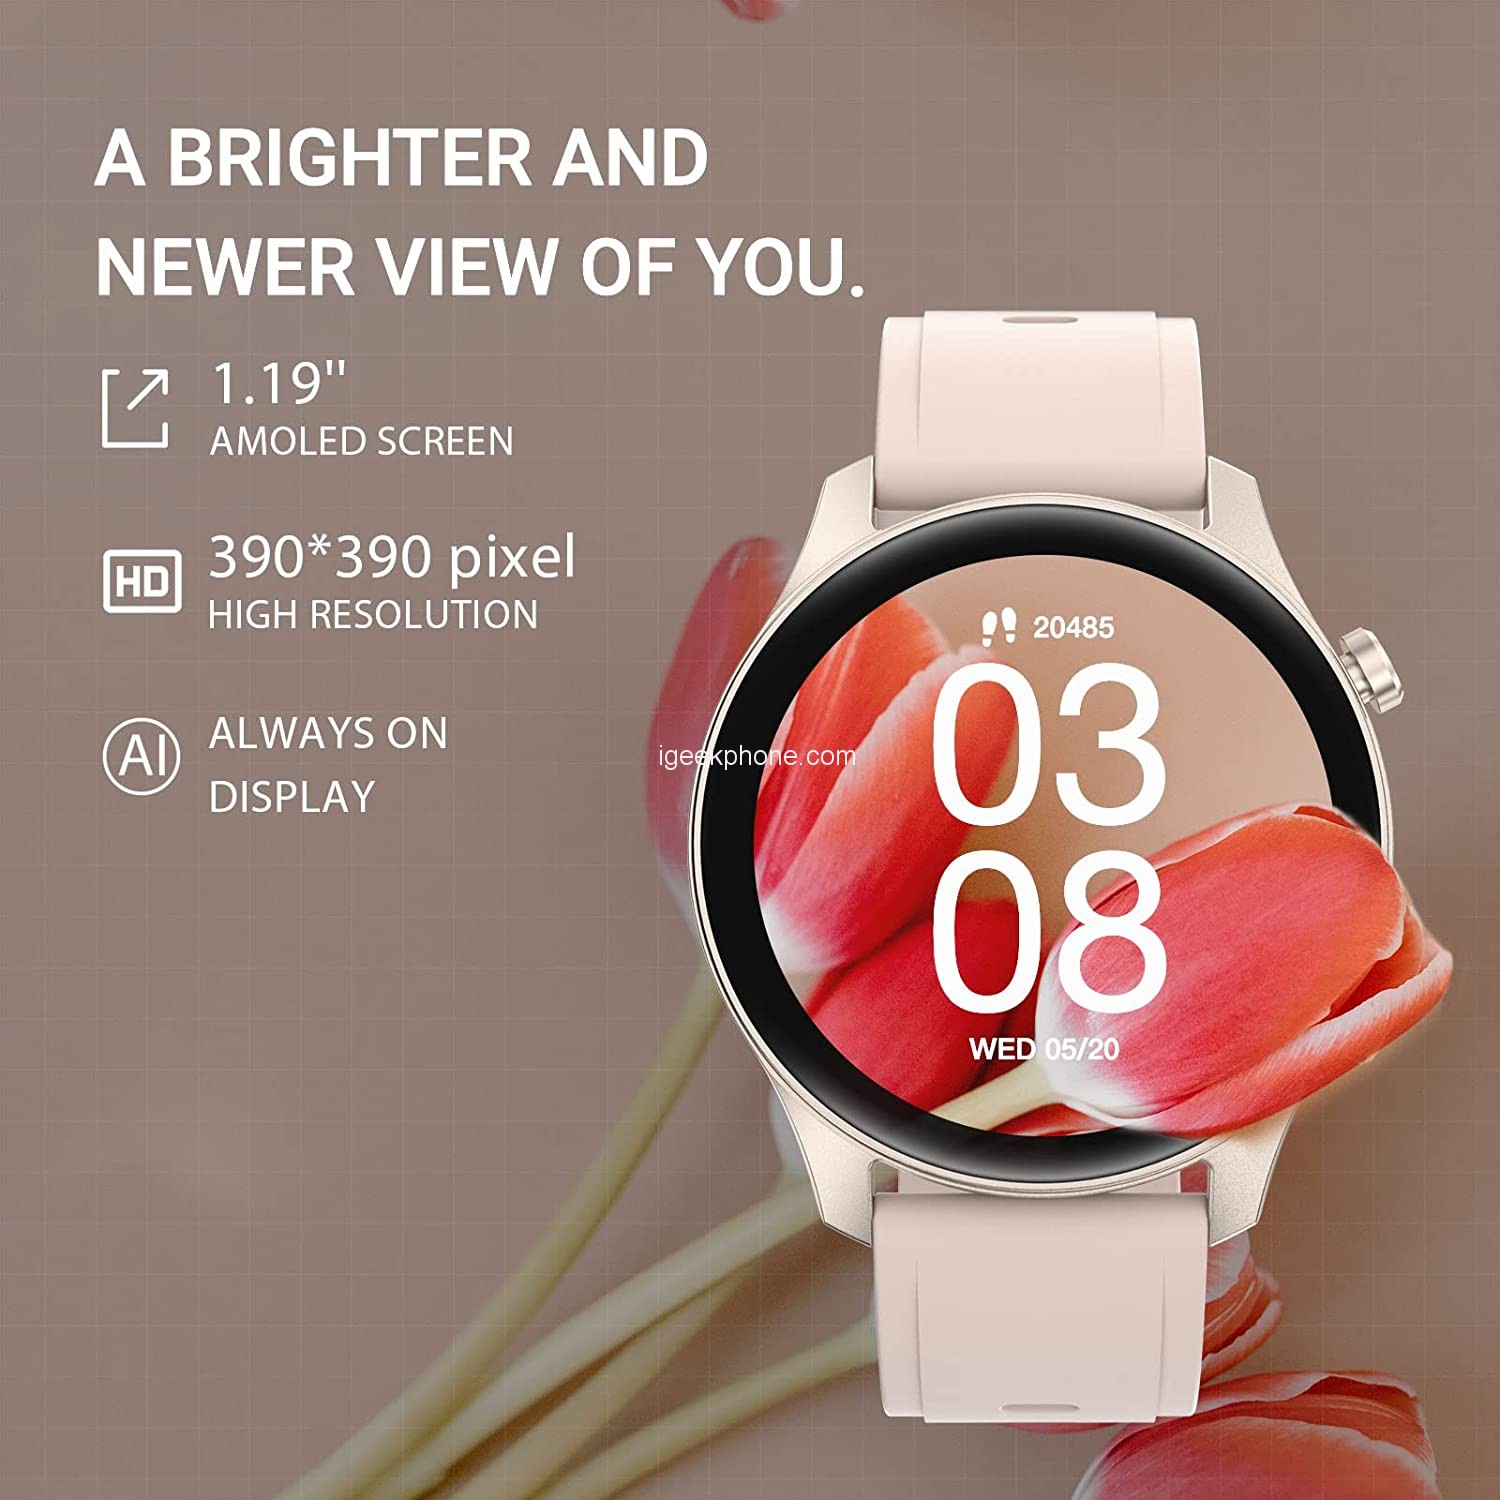 TouchElex Smart Watch 1.2 Inch AMOLED Watch Review